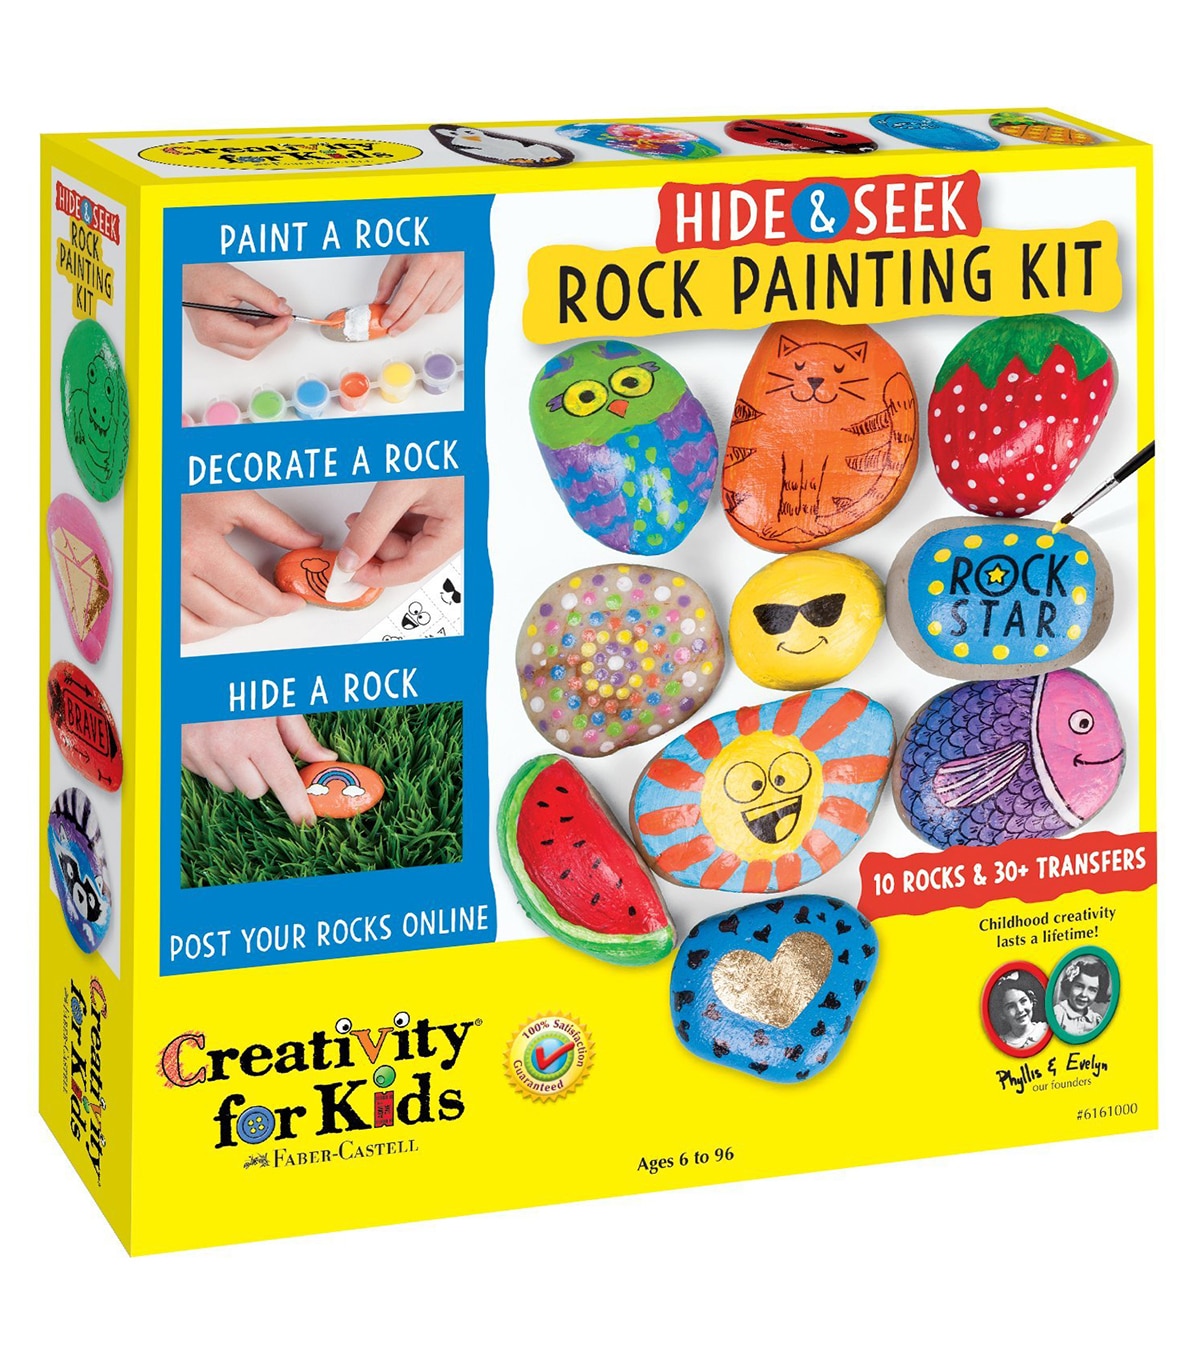 childrens craft kits